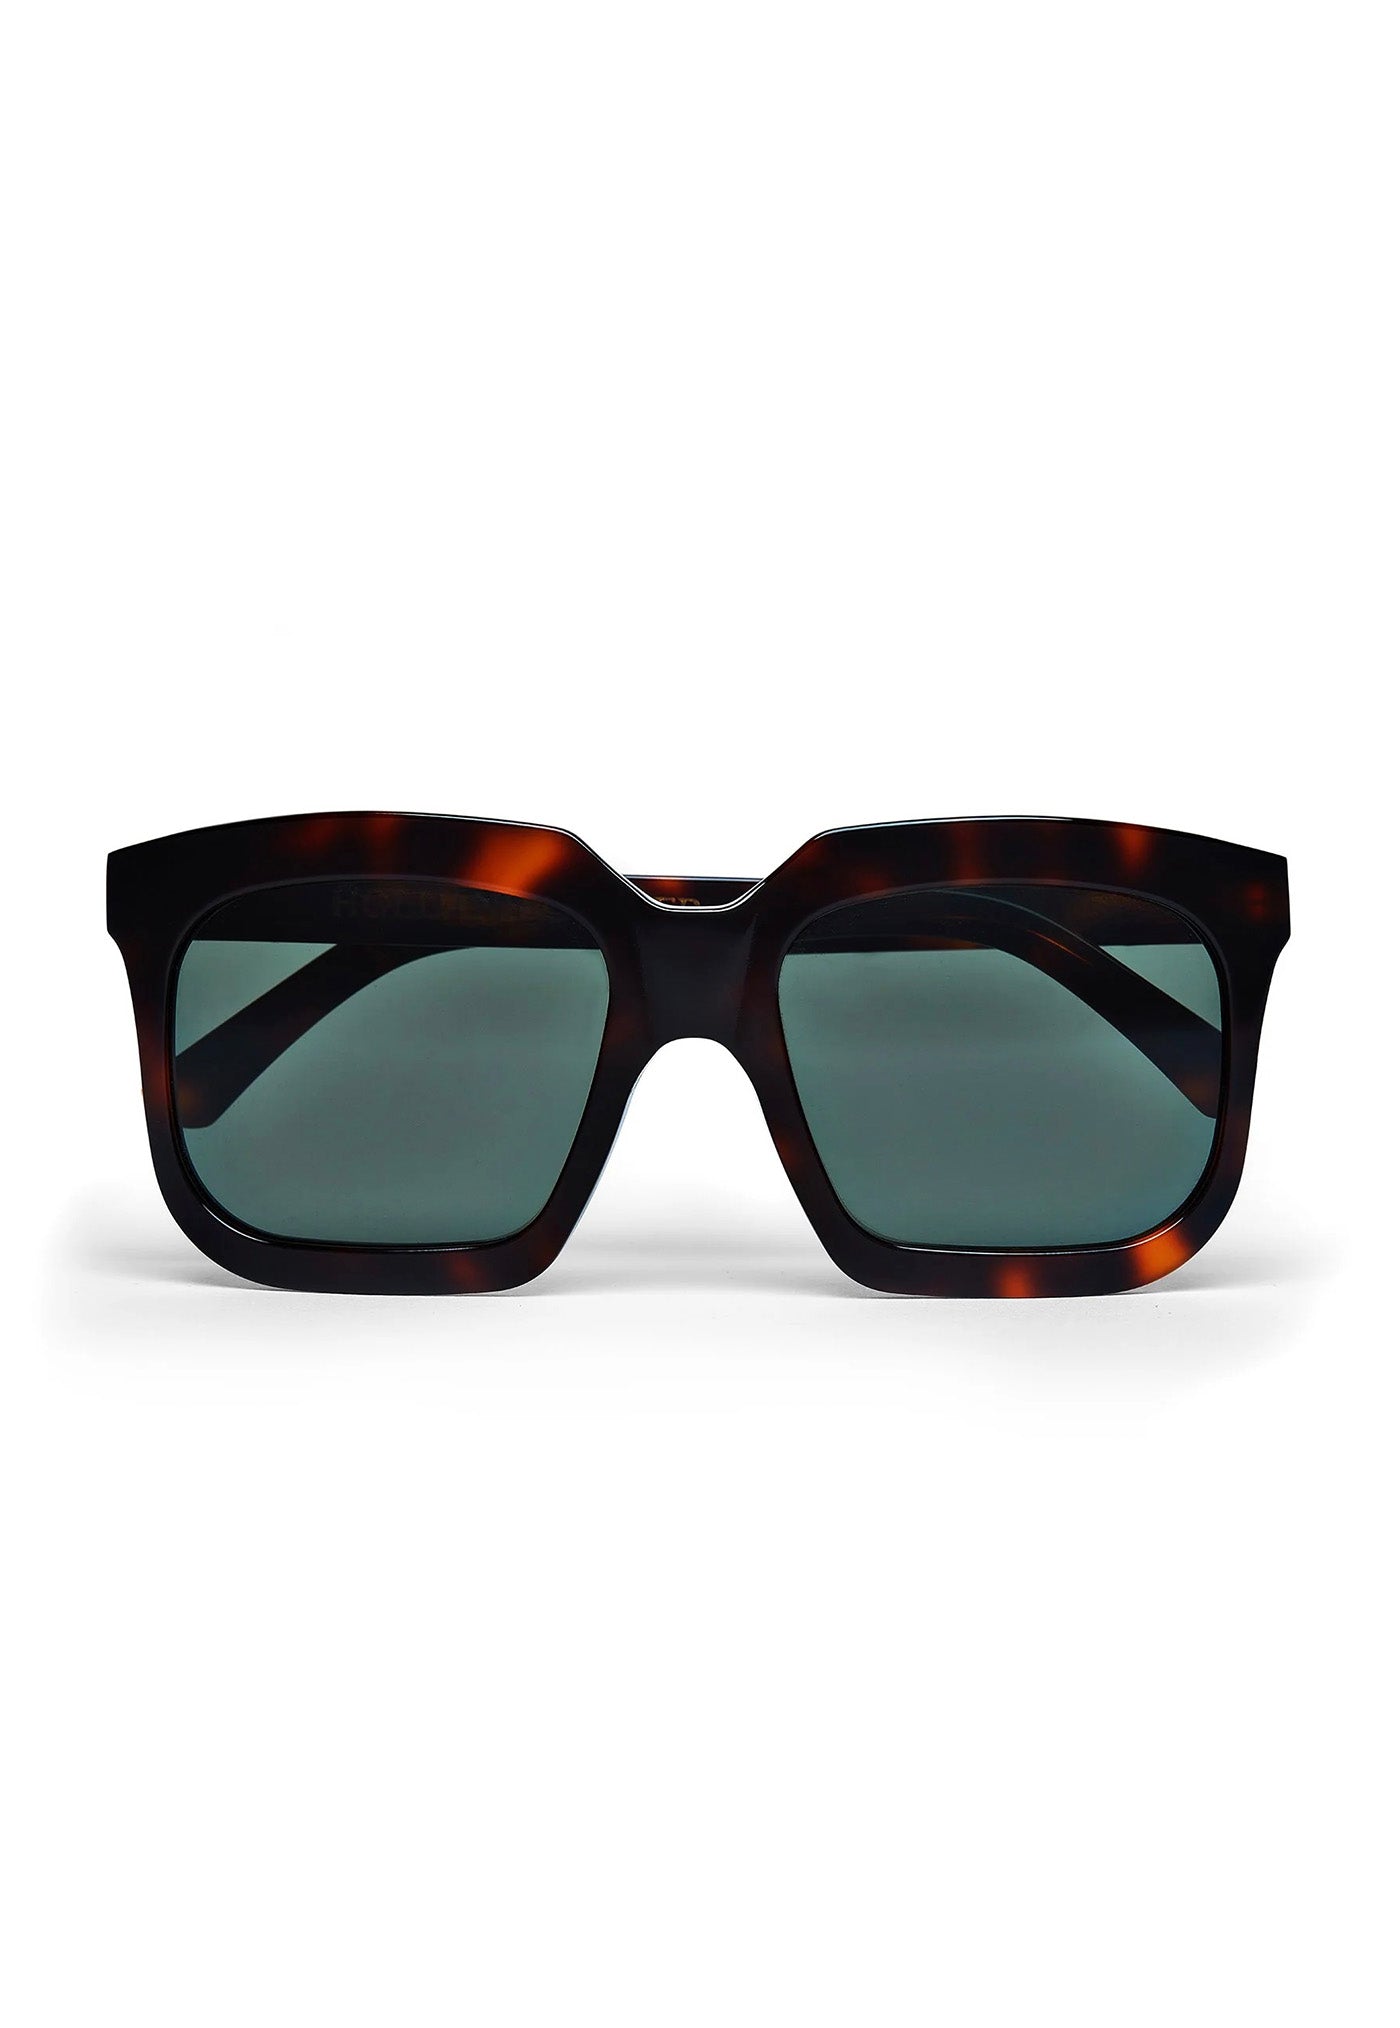 City Sunglasses - Tortoiseshell sold by Angel Divine